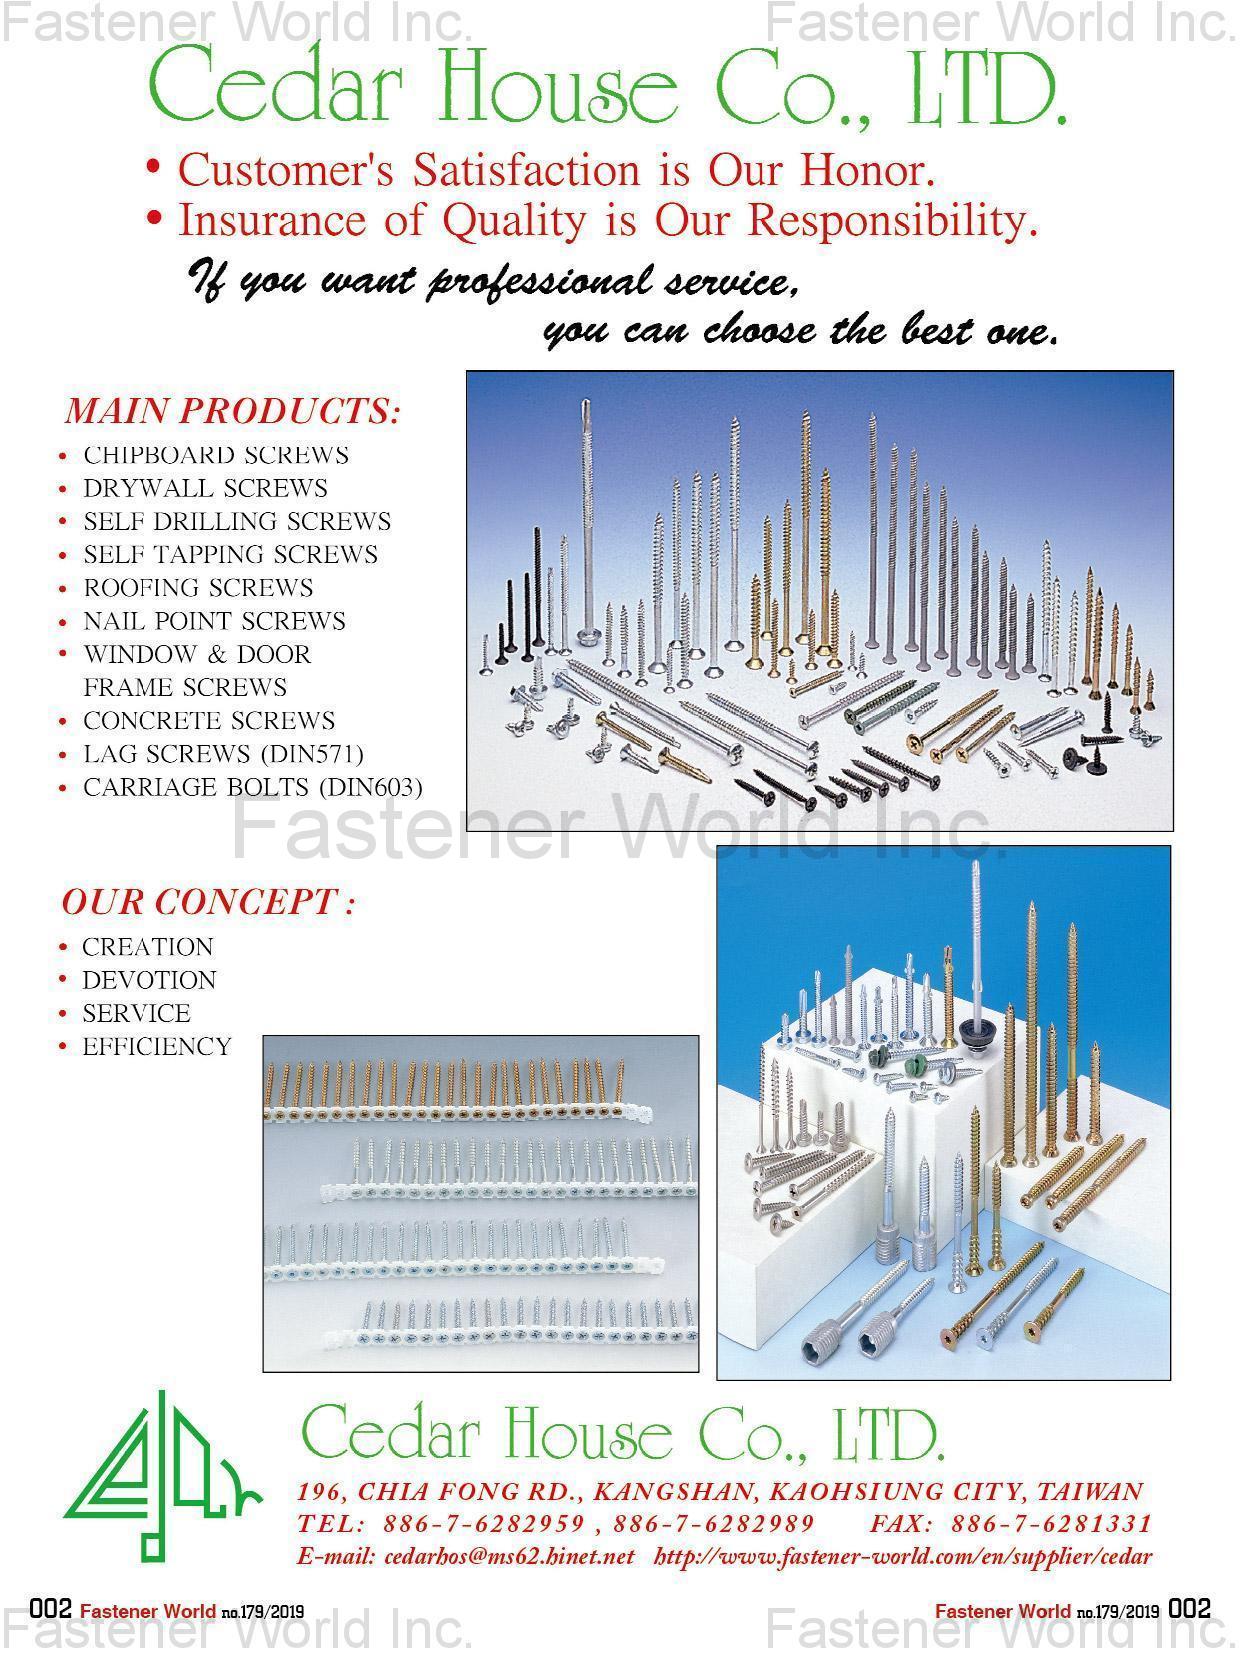 CEDAR HOUSE CO., LTD.  , Chipboard Screws, Drywall Screws, Self Drilling Screws, Self Tapping Screws, Roofing Screws, Nail Point Screws, Window & Door Frame Screws, Concrete Screws, Lag Screws (DIN571), Carriage Bolts (DIN603)